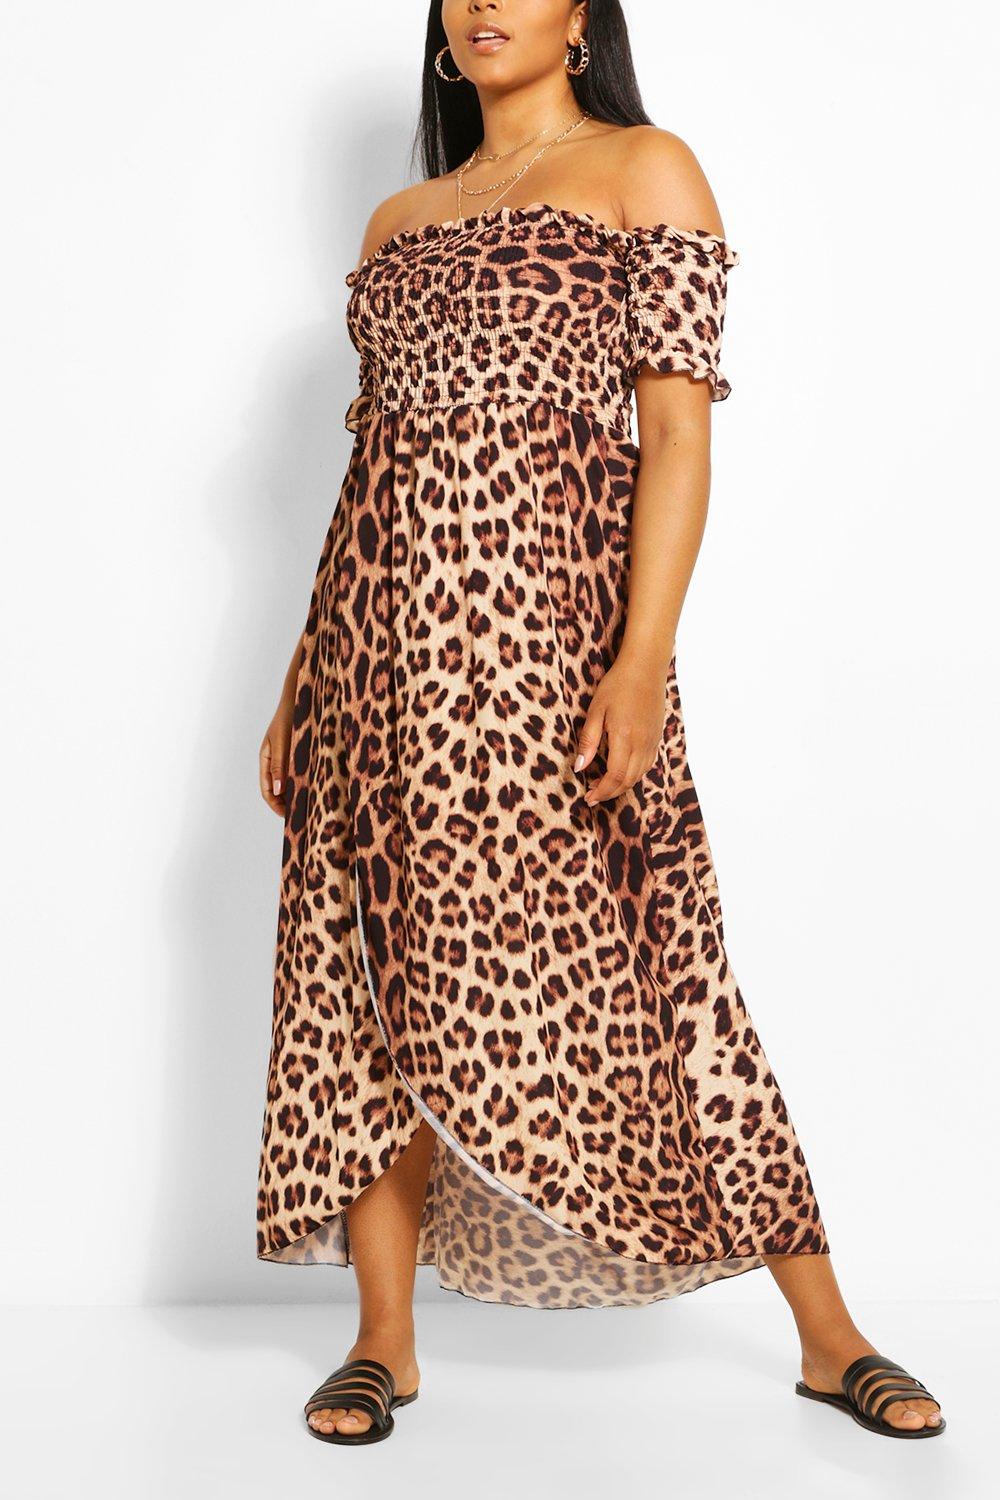 off the shoulder cheetah print dress